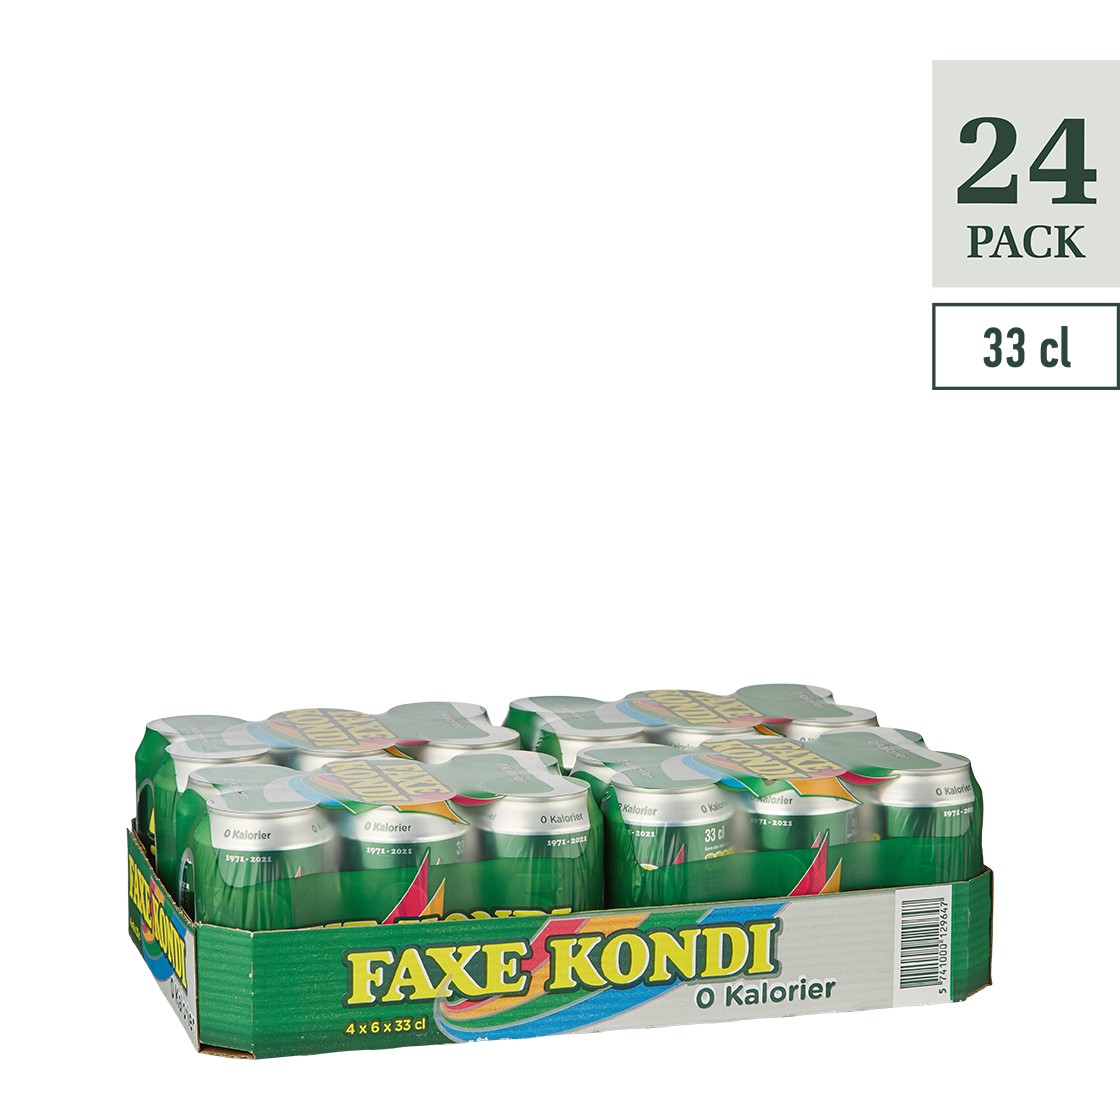 Faxe Kondi 0 Kalorier 0,33L 4X6-PACK CANS/CASE